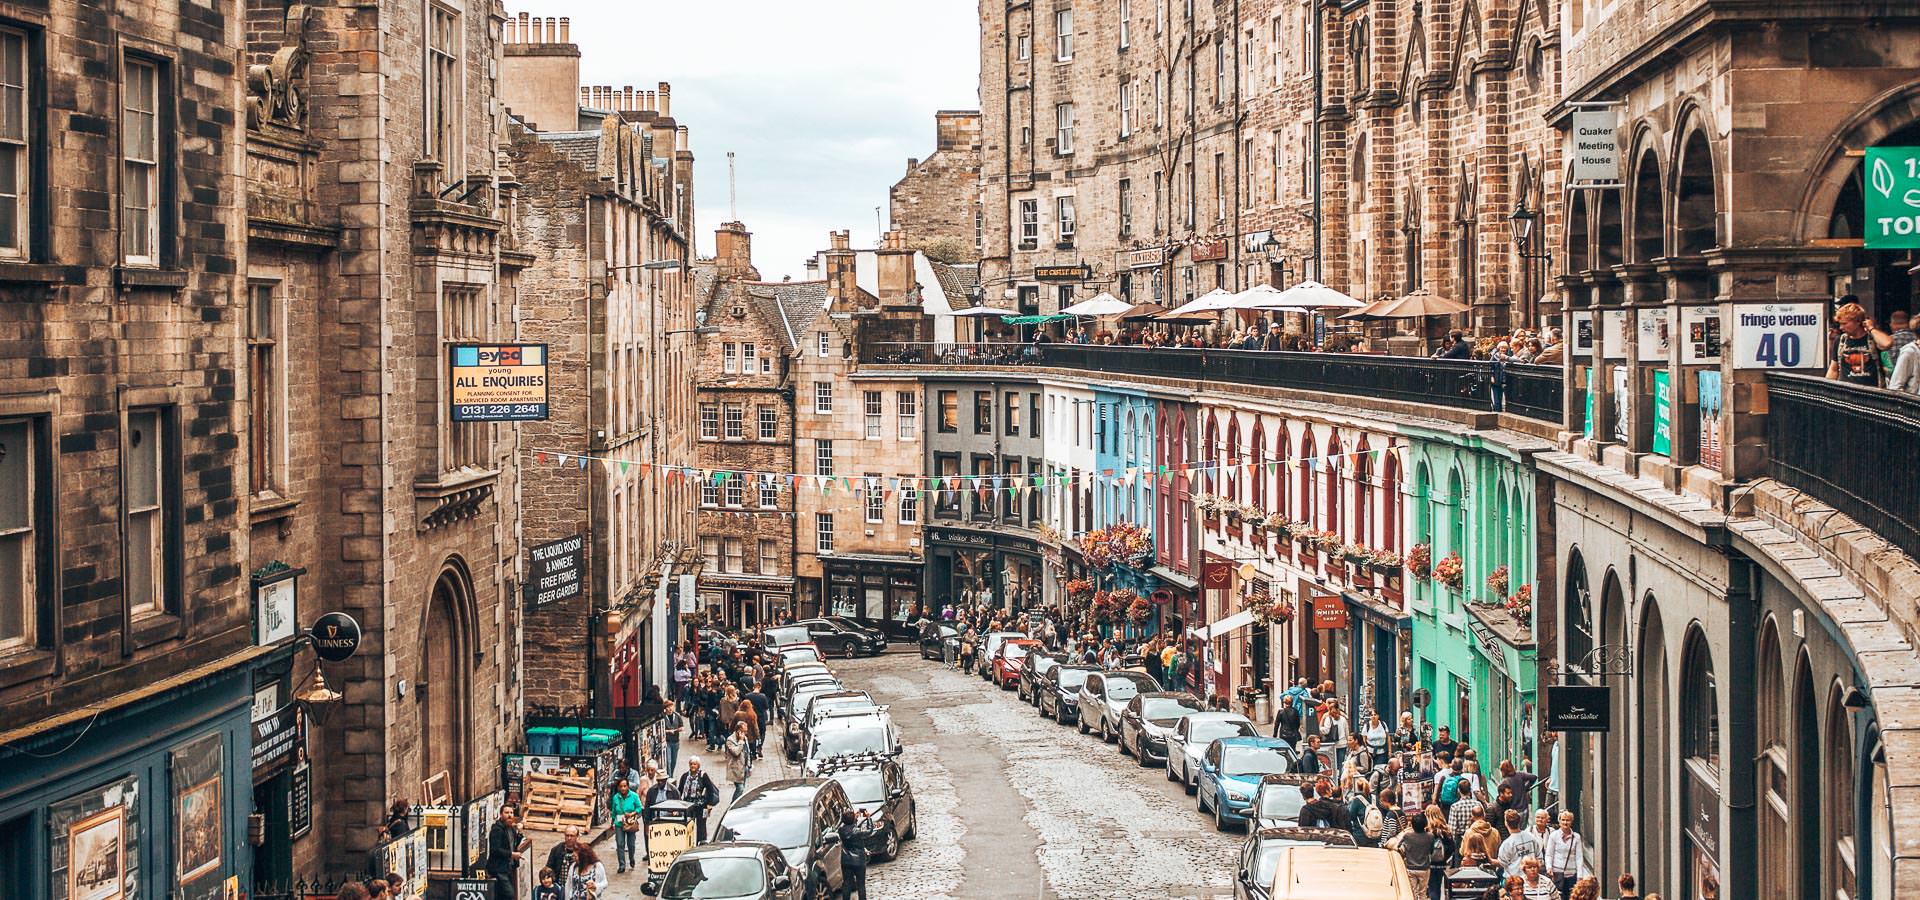 The Best 5 Specialty Coffee Shops in Edinburgh | 48 hours in edinburgh 2